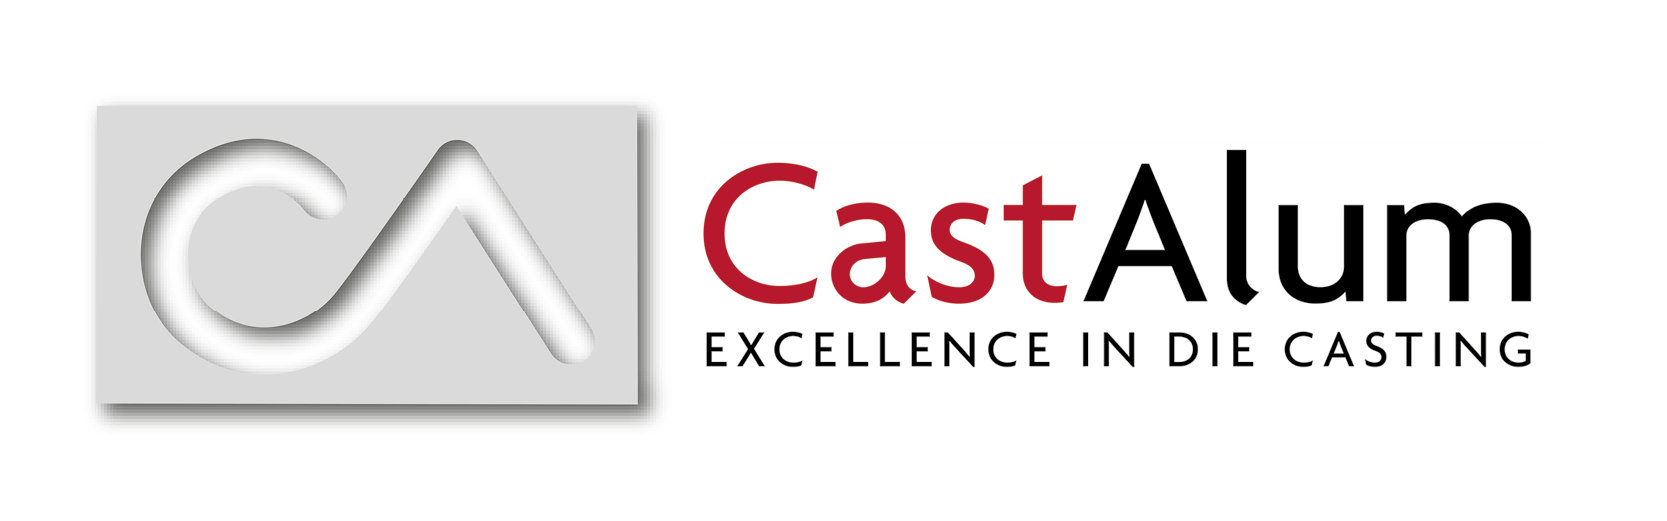 Cast Alumn logo